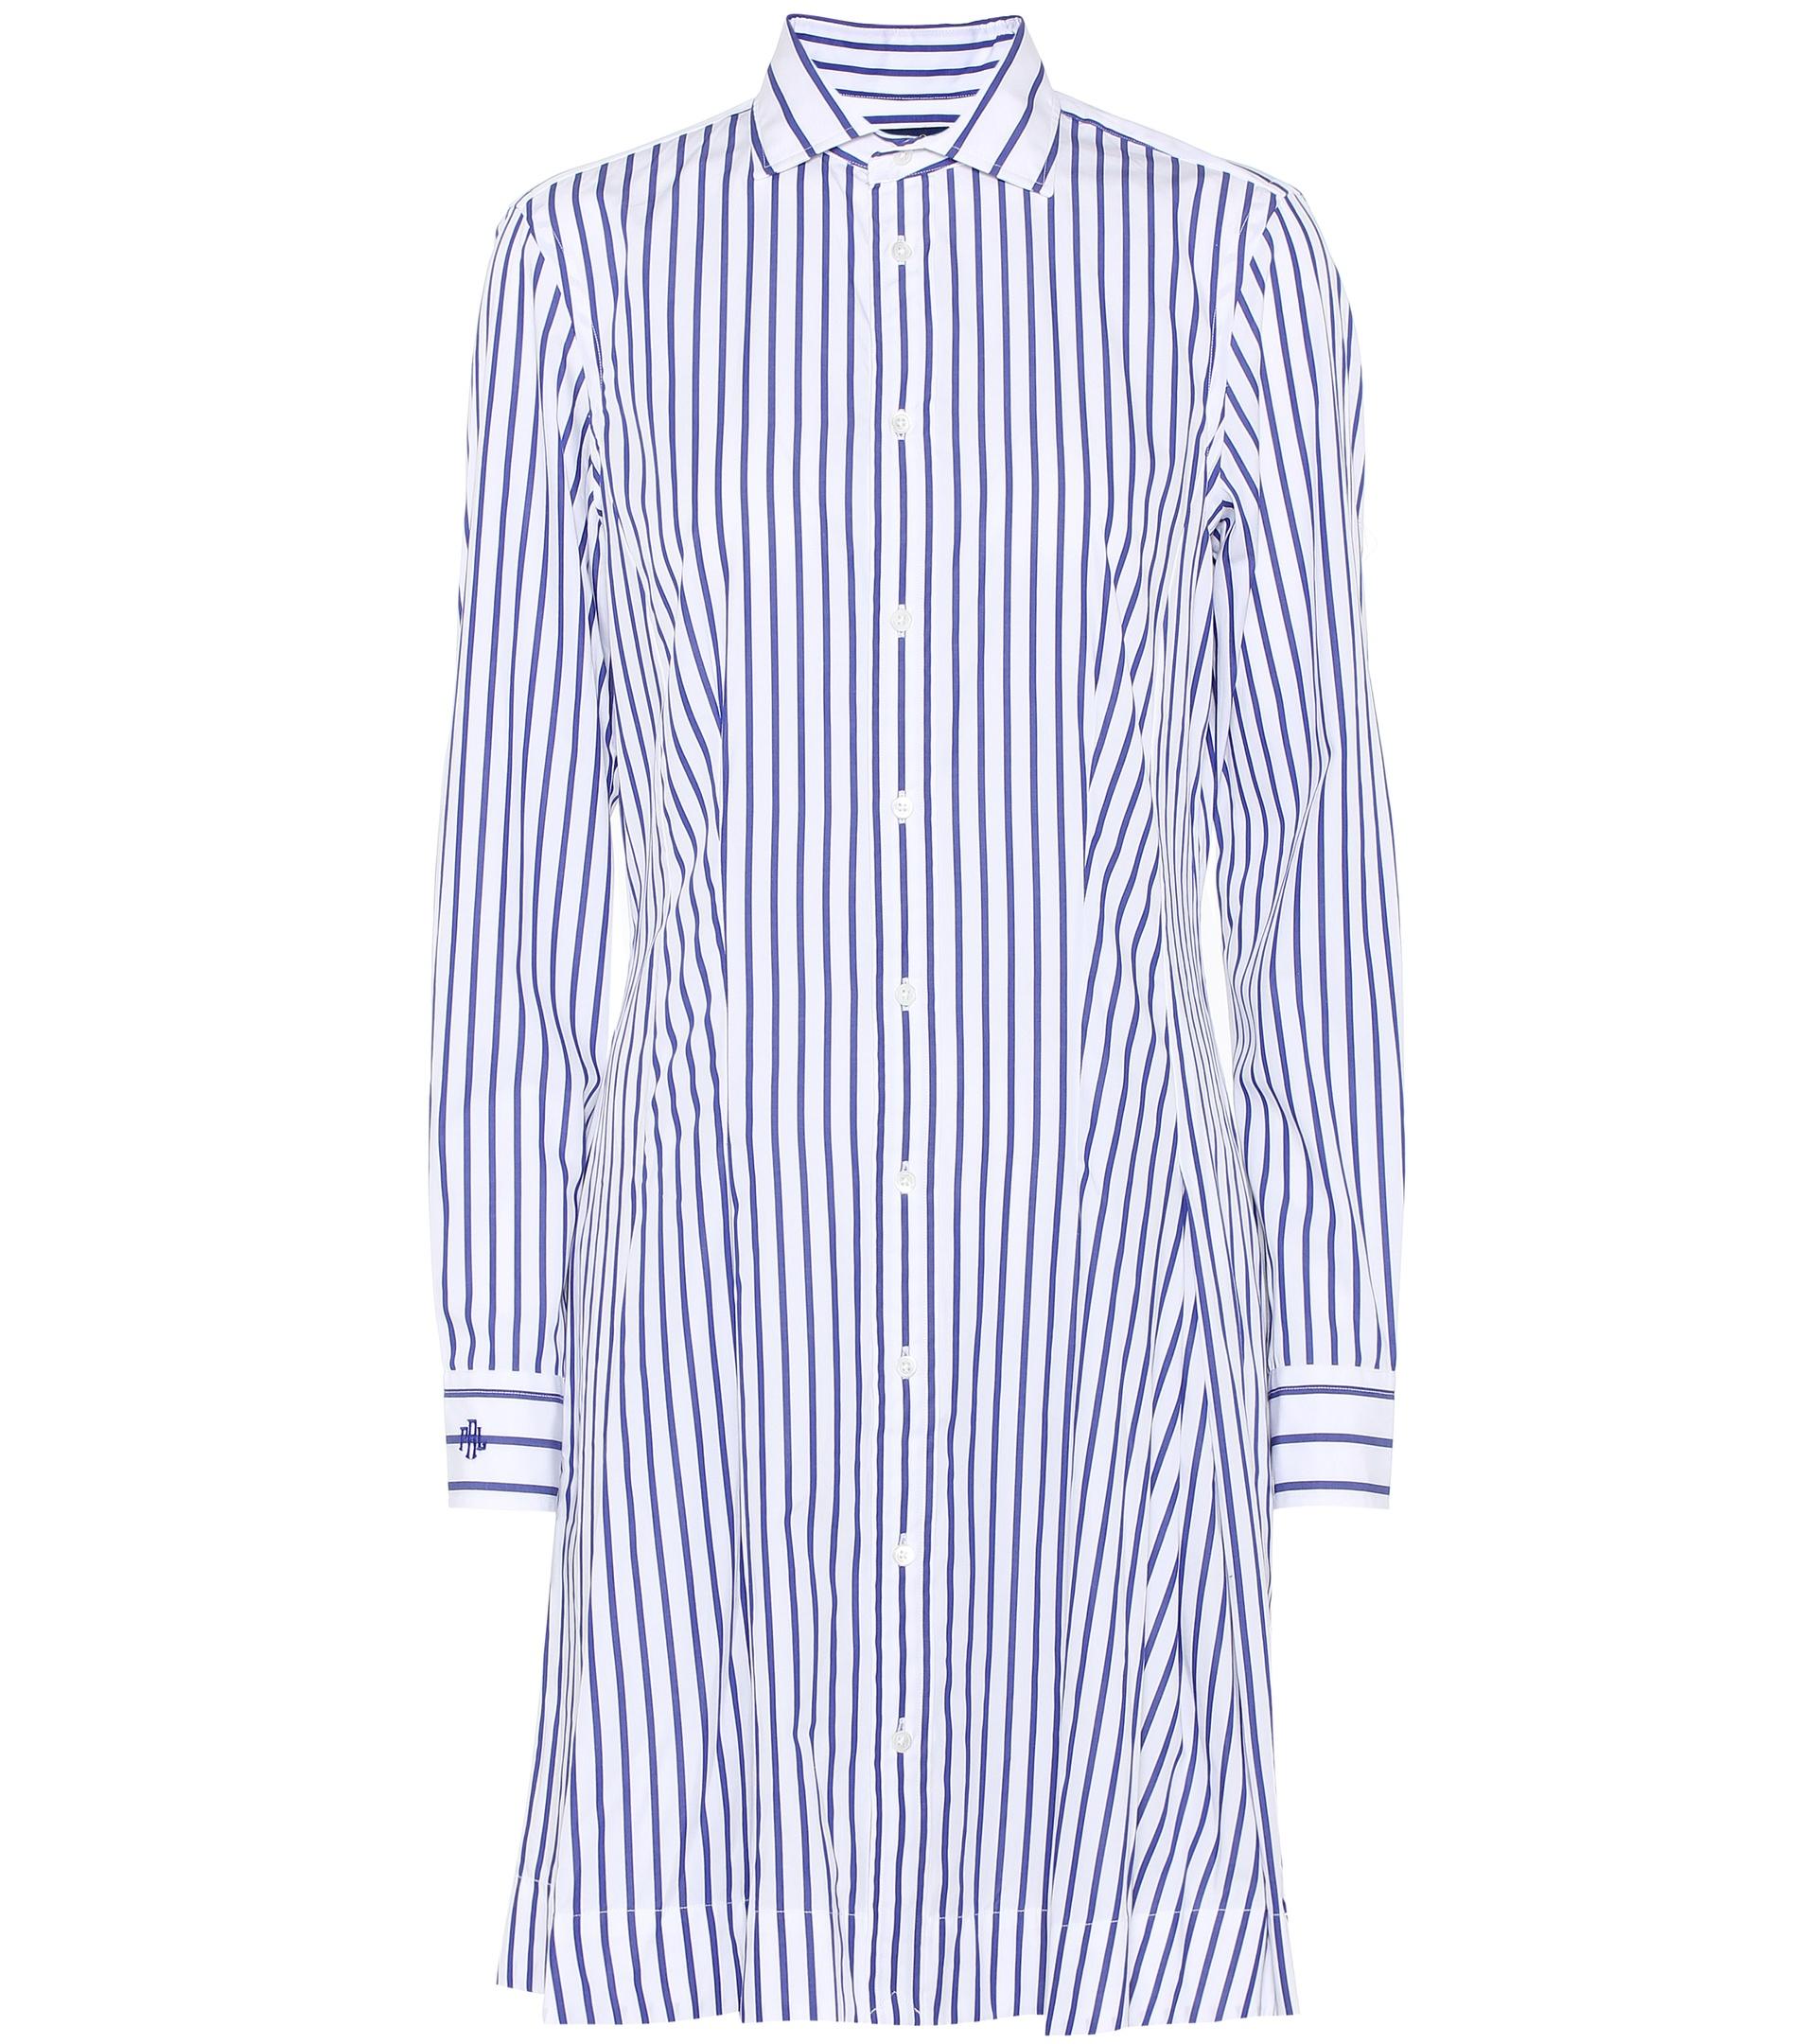 Lyst - Polo Ralph Lauren Striped Cotton Dress in Blue